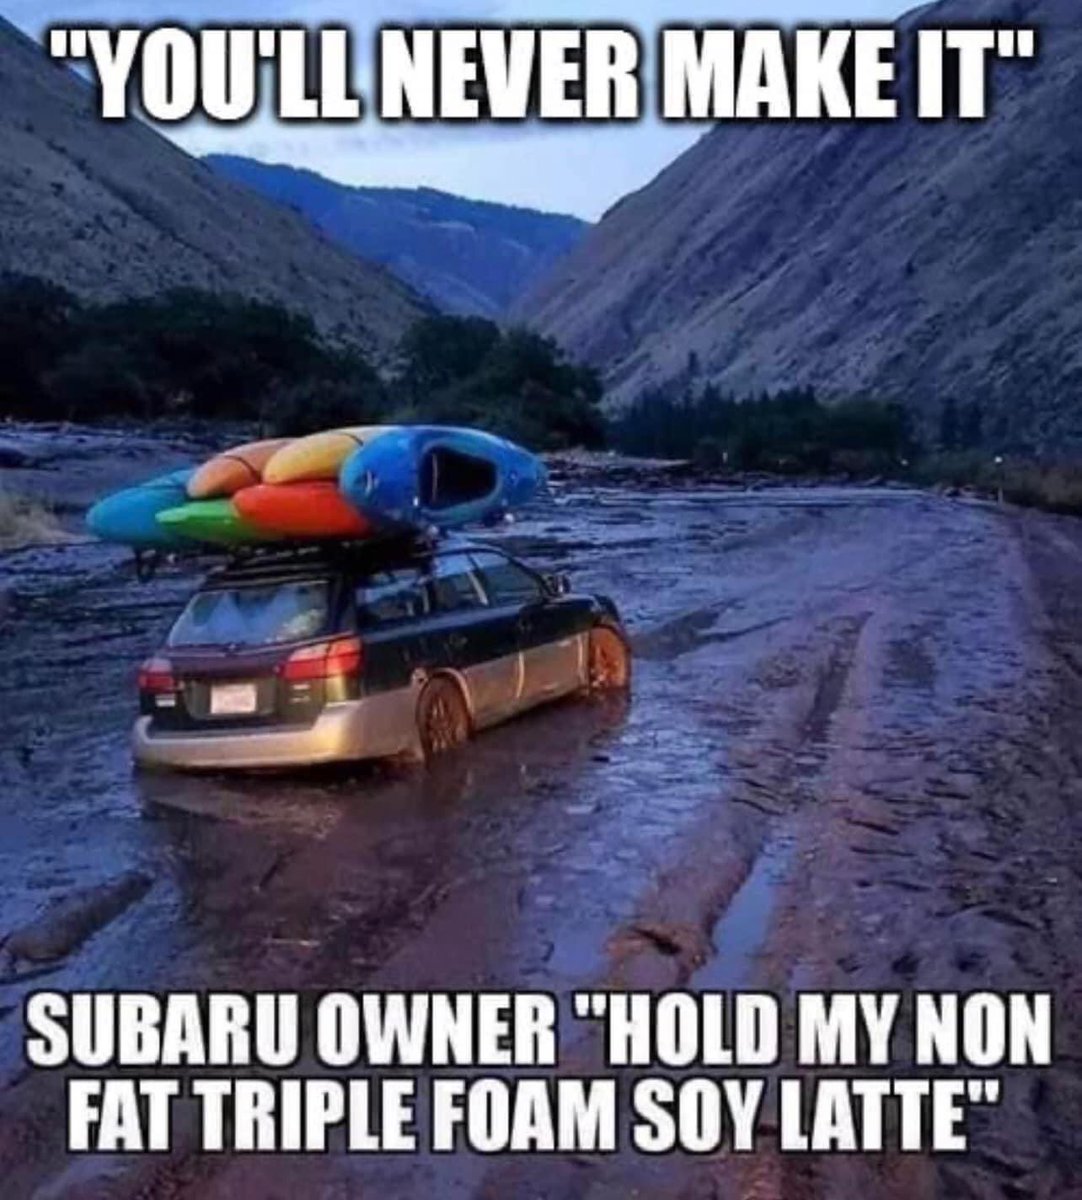 Isn't this the truth! Where do you take your Subaru?
-
#MegaSubieShop #ClarksAutoFix #ClarksSubaruFix #Subaru #Forester #LibertyWells #Utah #SaltLakeCity #SLC #SLCSubaru